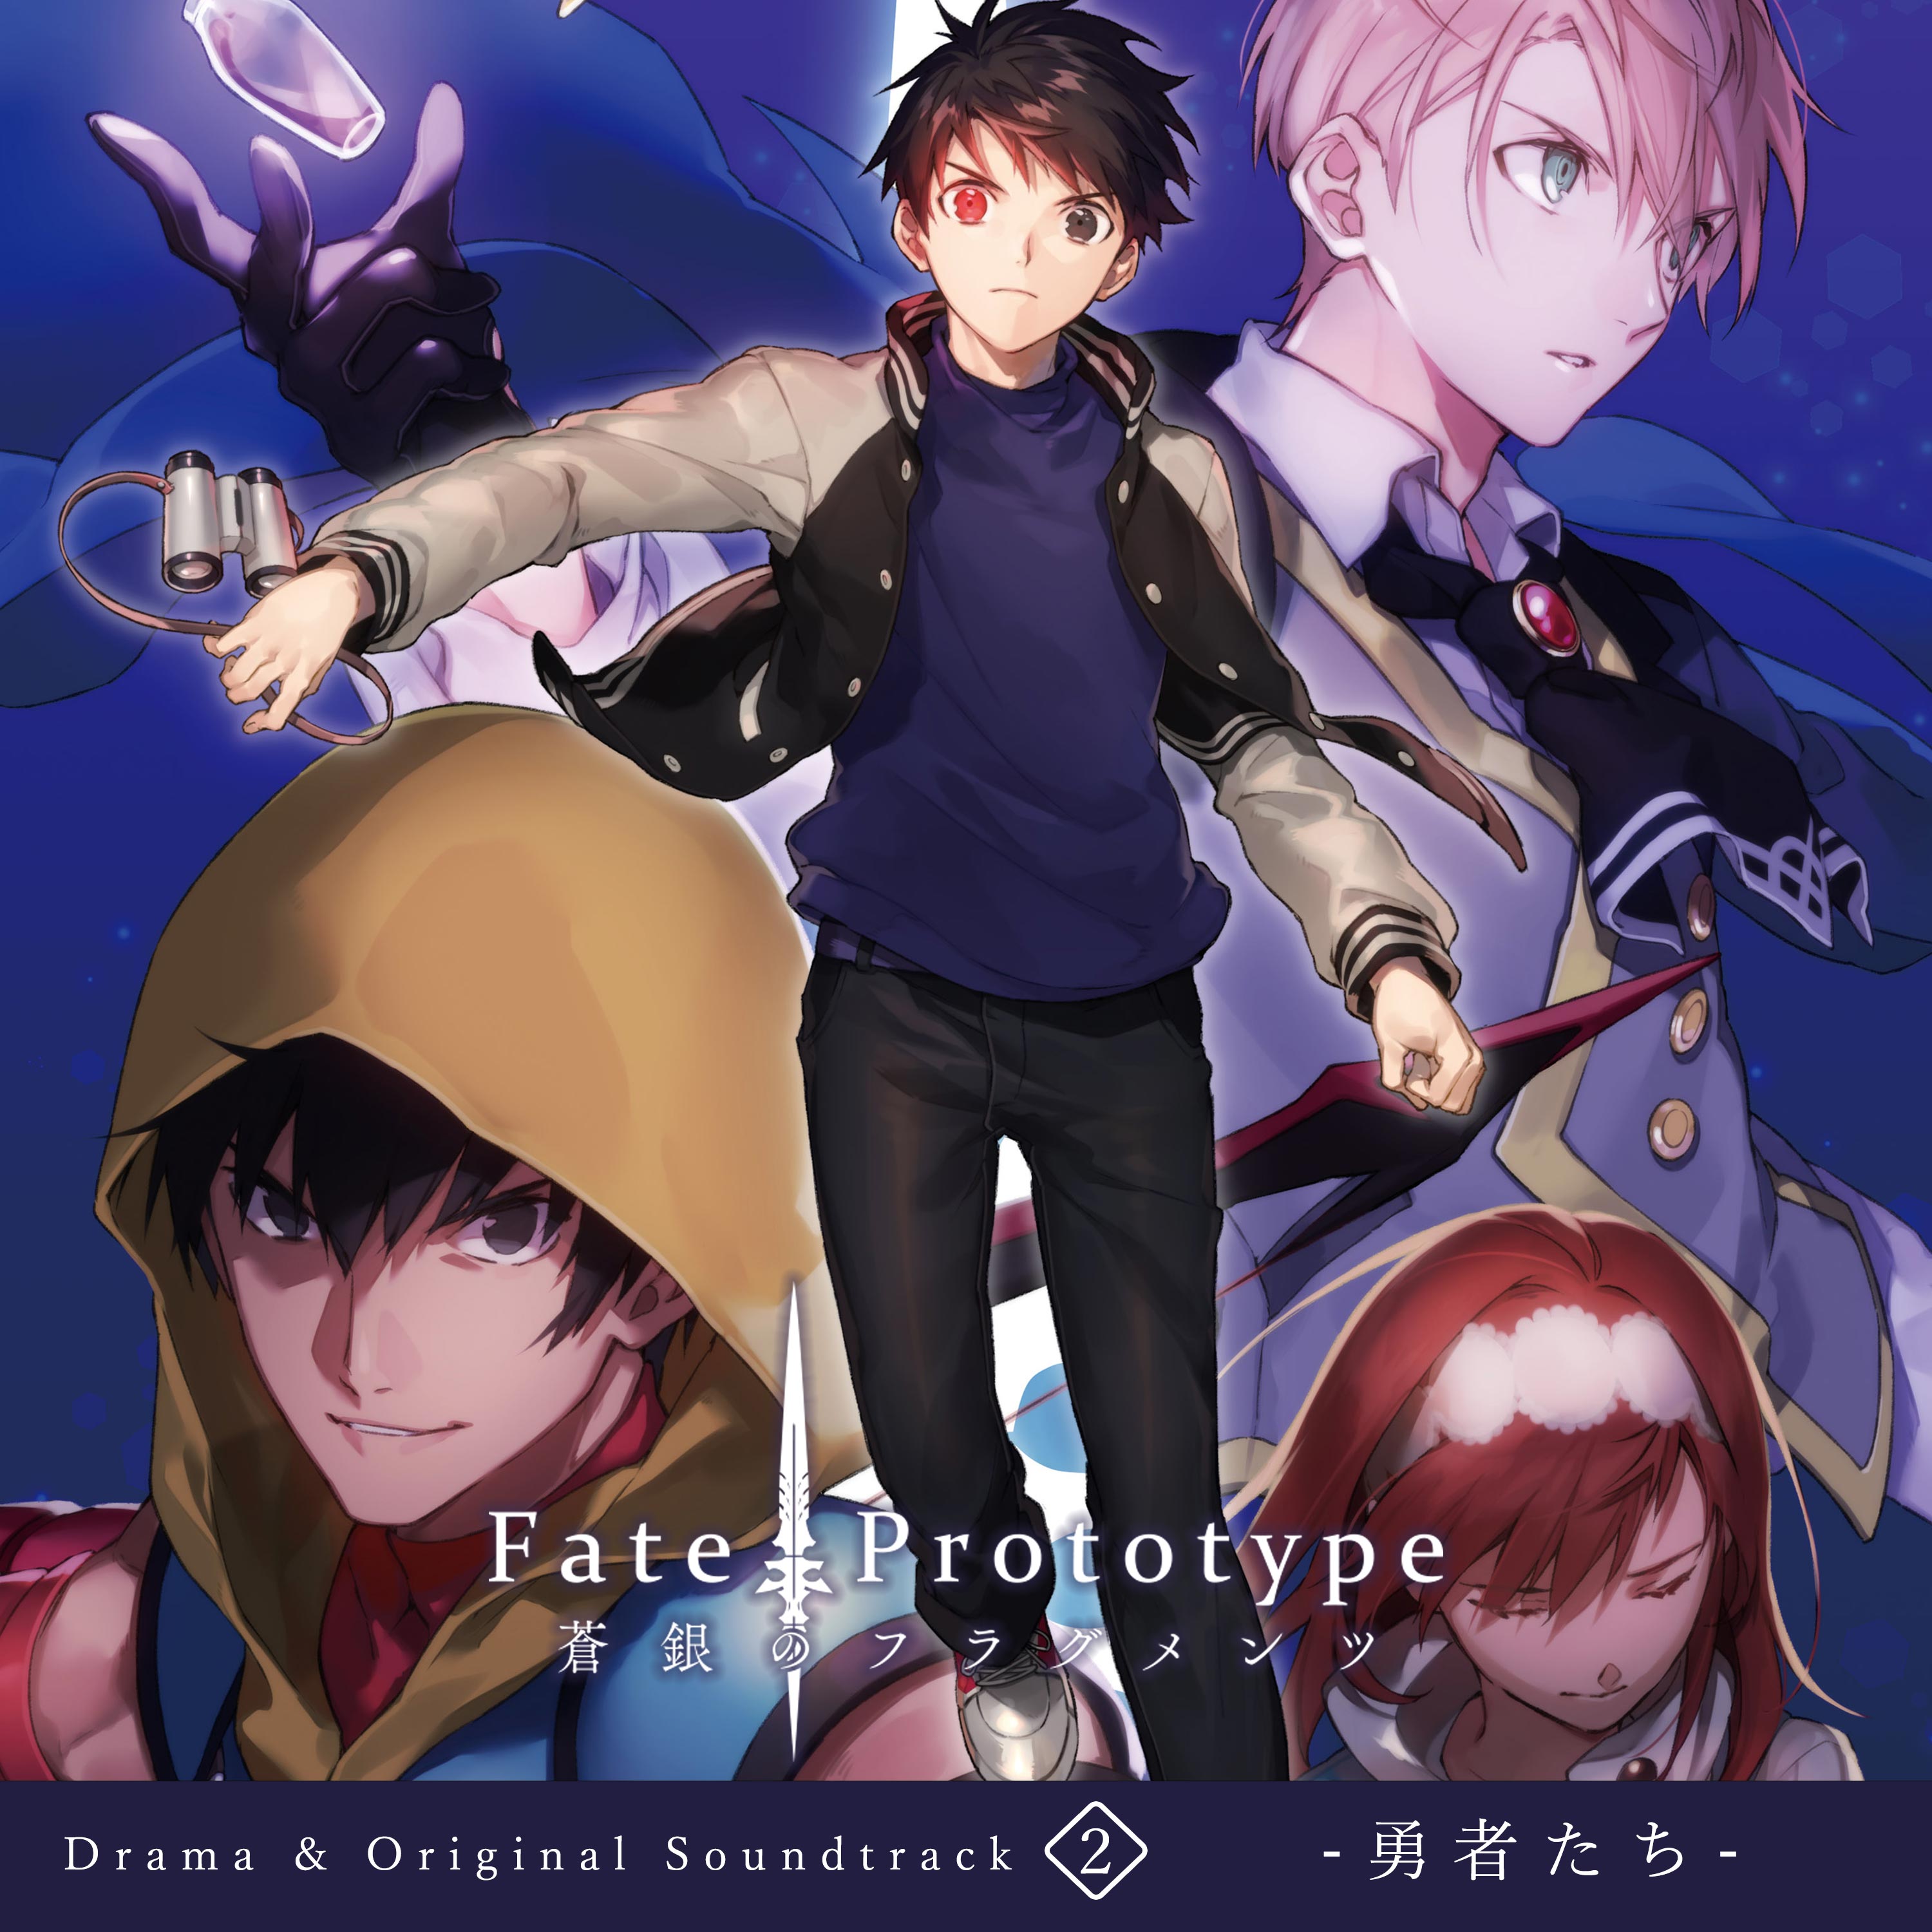 「Fate/Prototype 蒼銀のフラグメンツ Drama & Original Soundtrack 